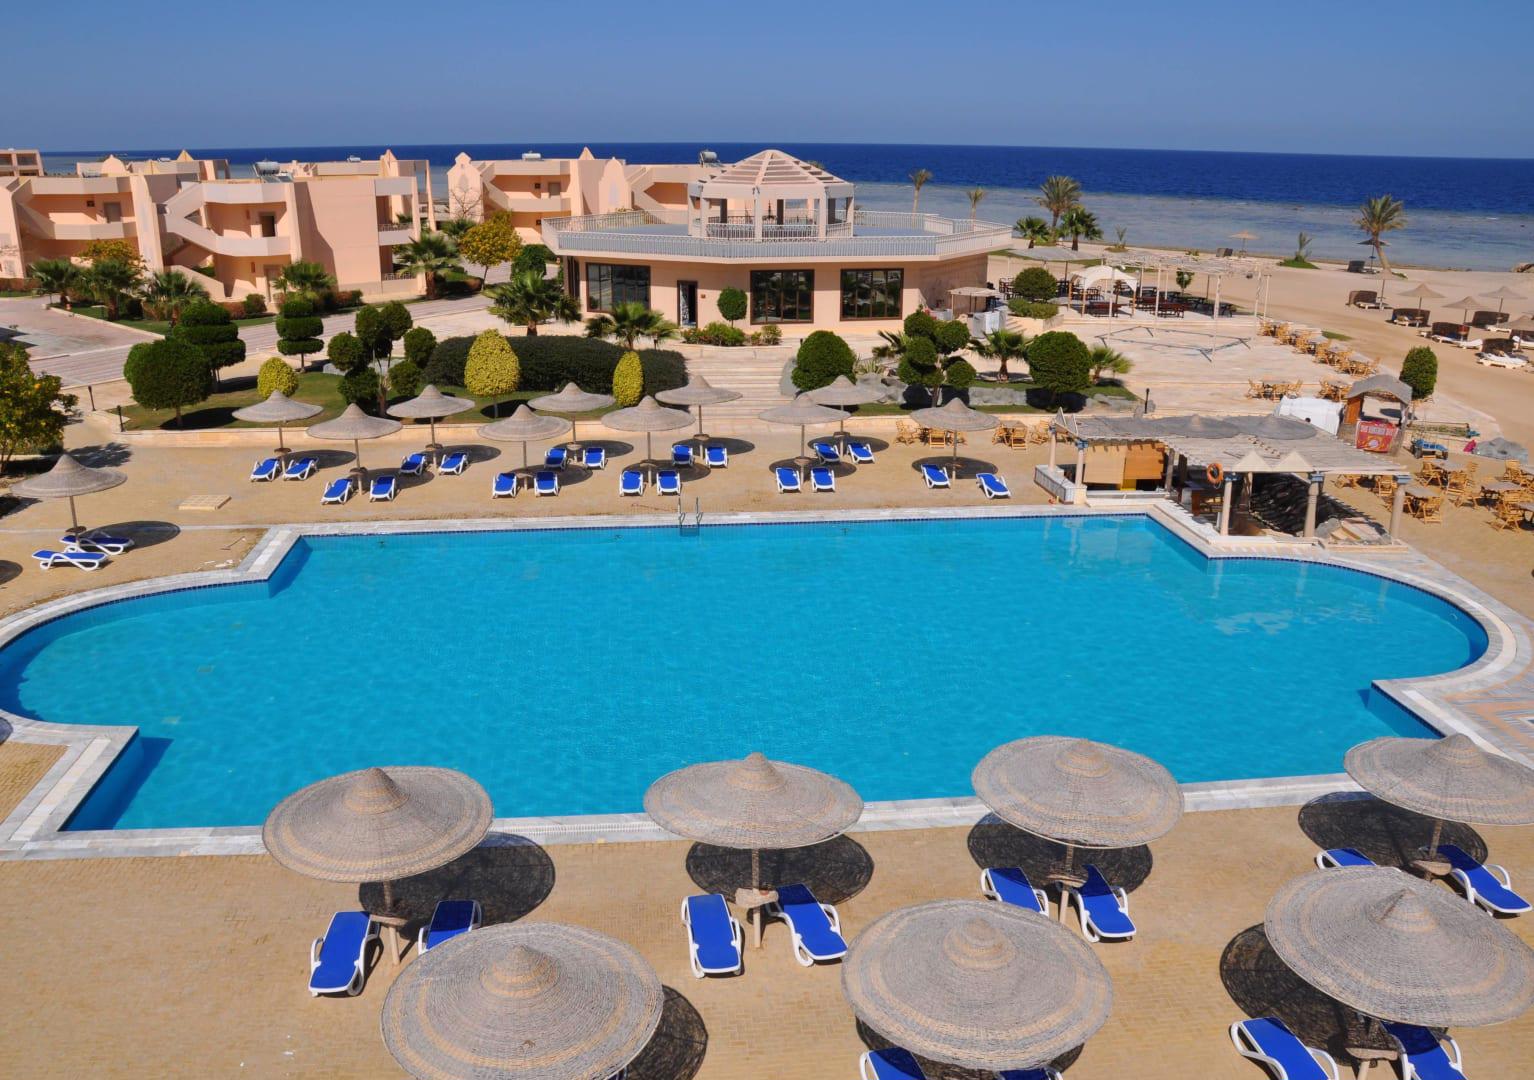 Paradise Club Shoni Bay - Marsa Alam - Egypte